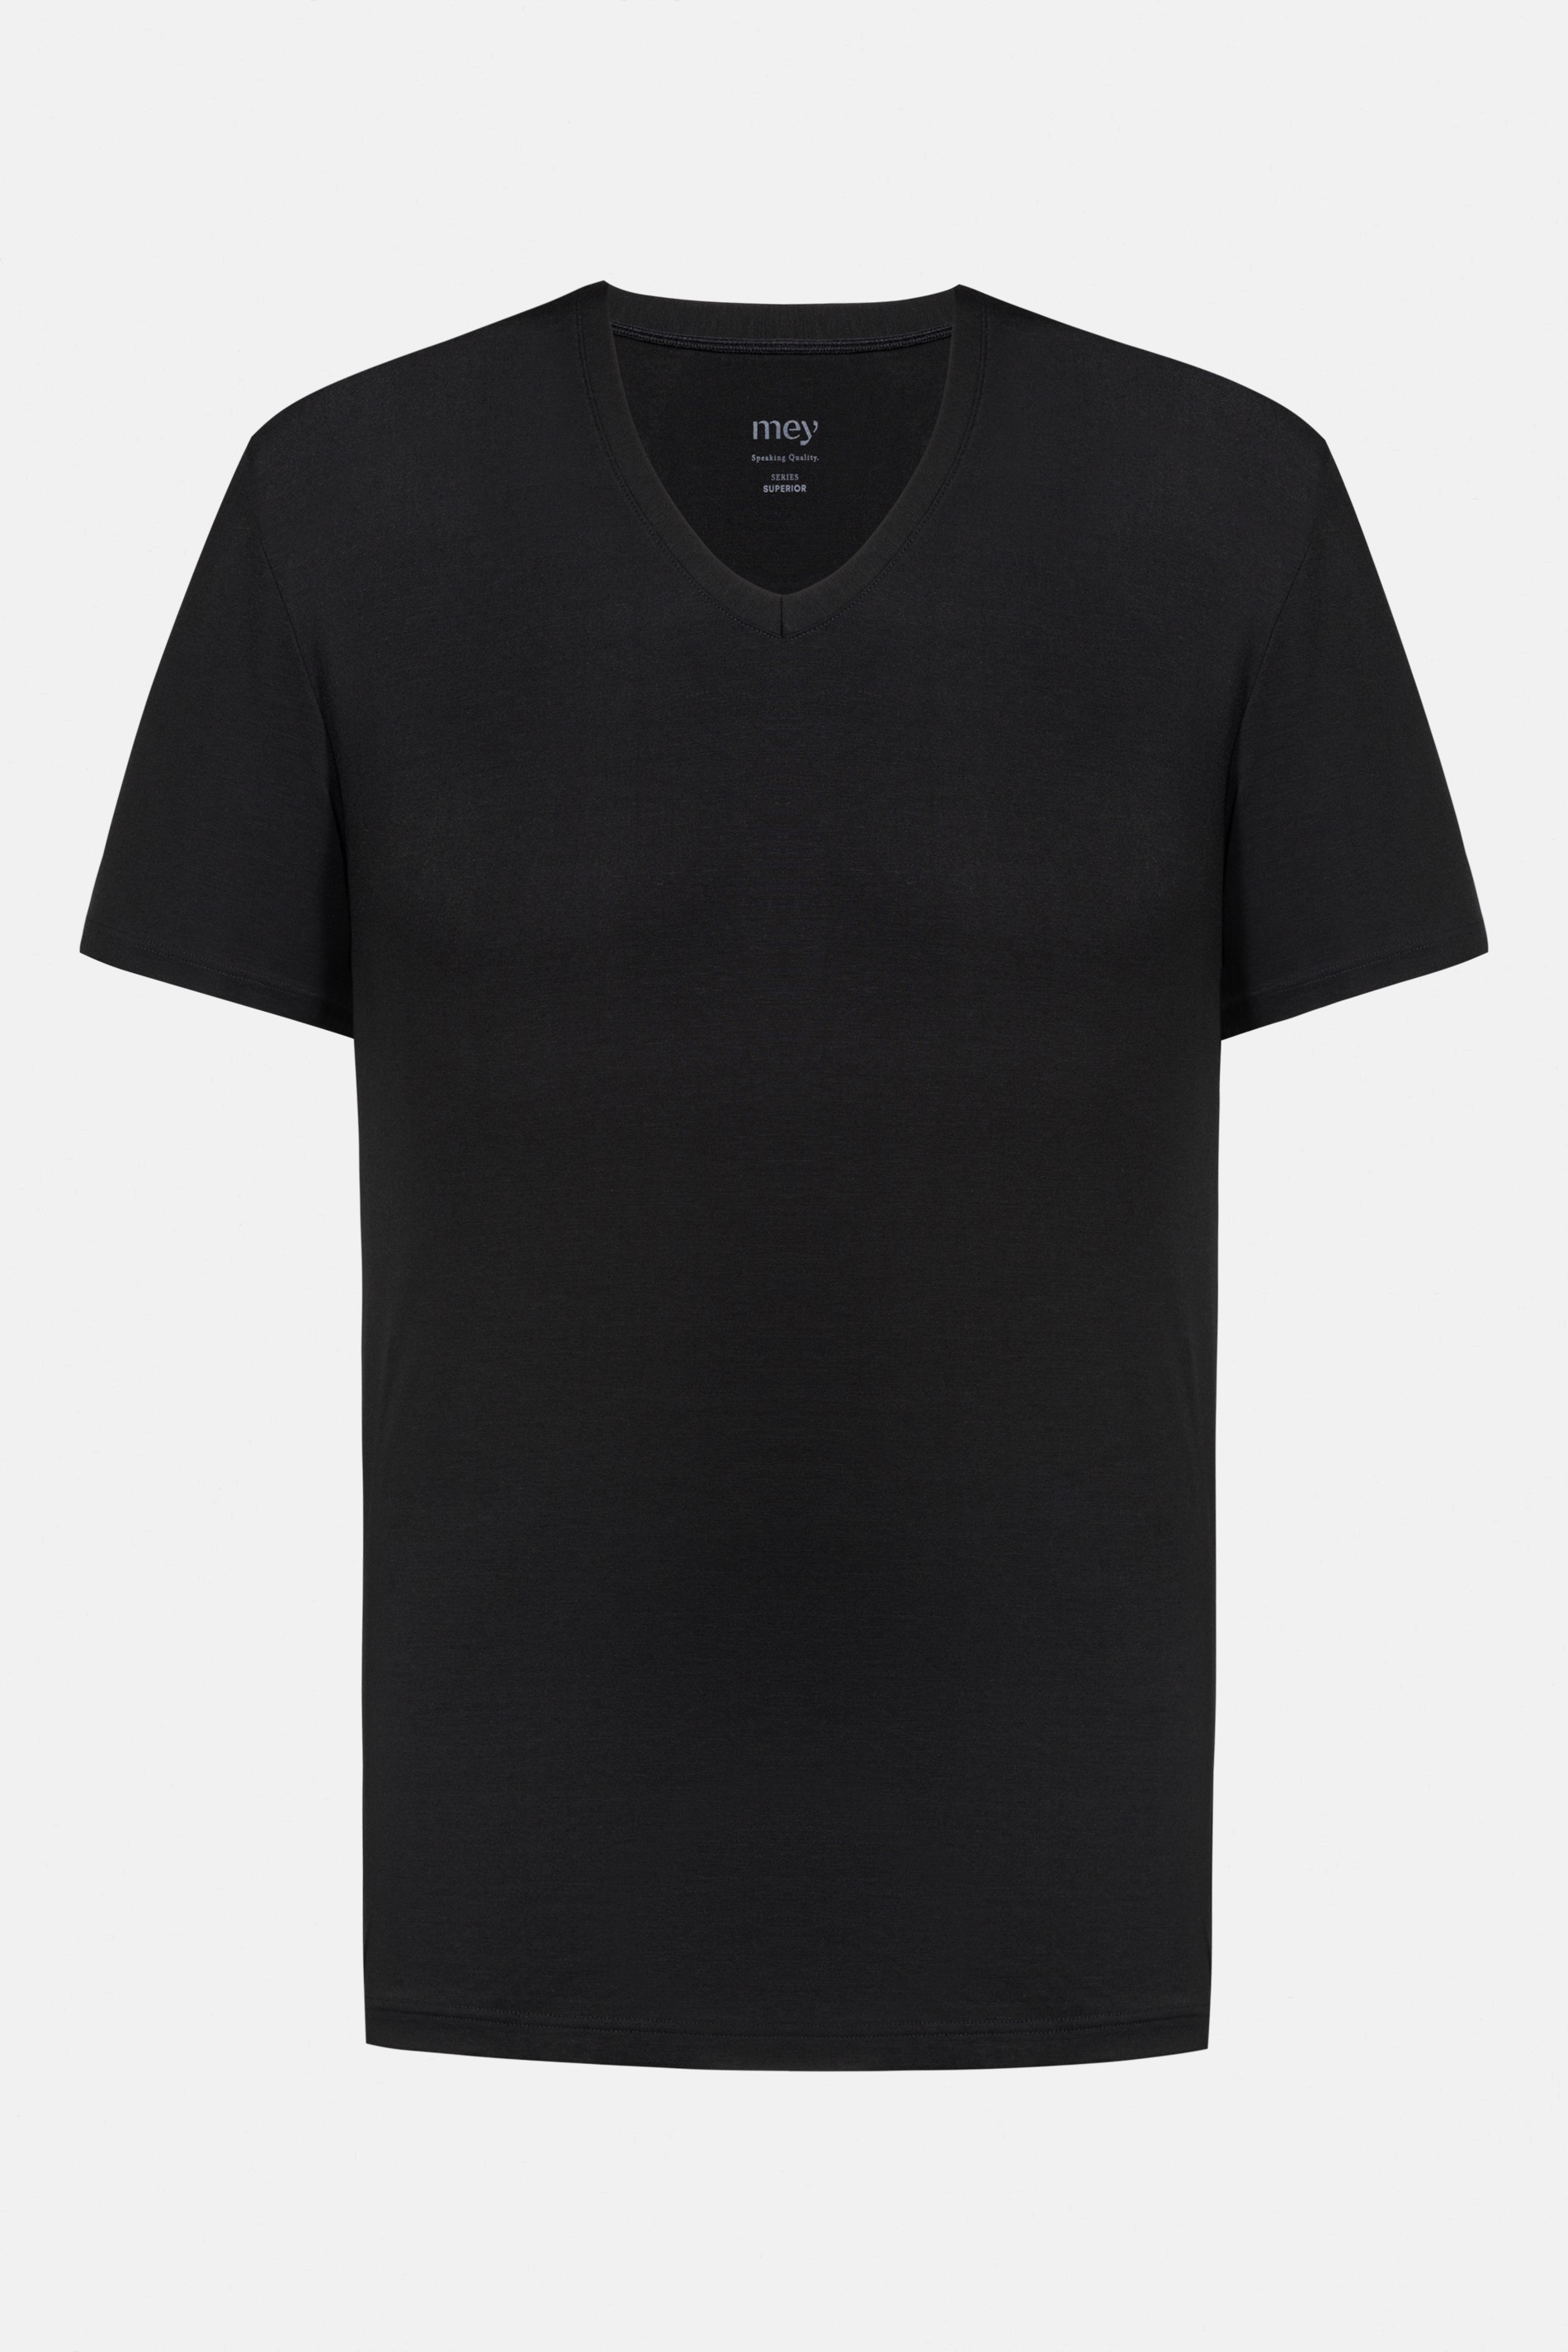 T-shirt Black Serie Superior Modal Cut Out | mey®